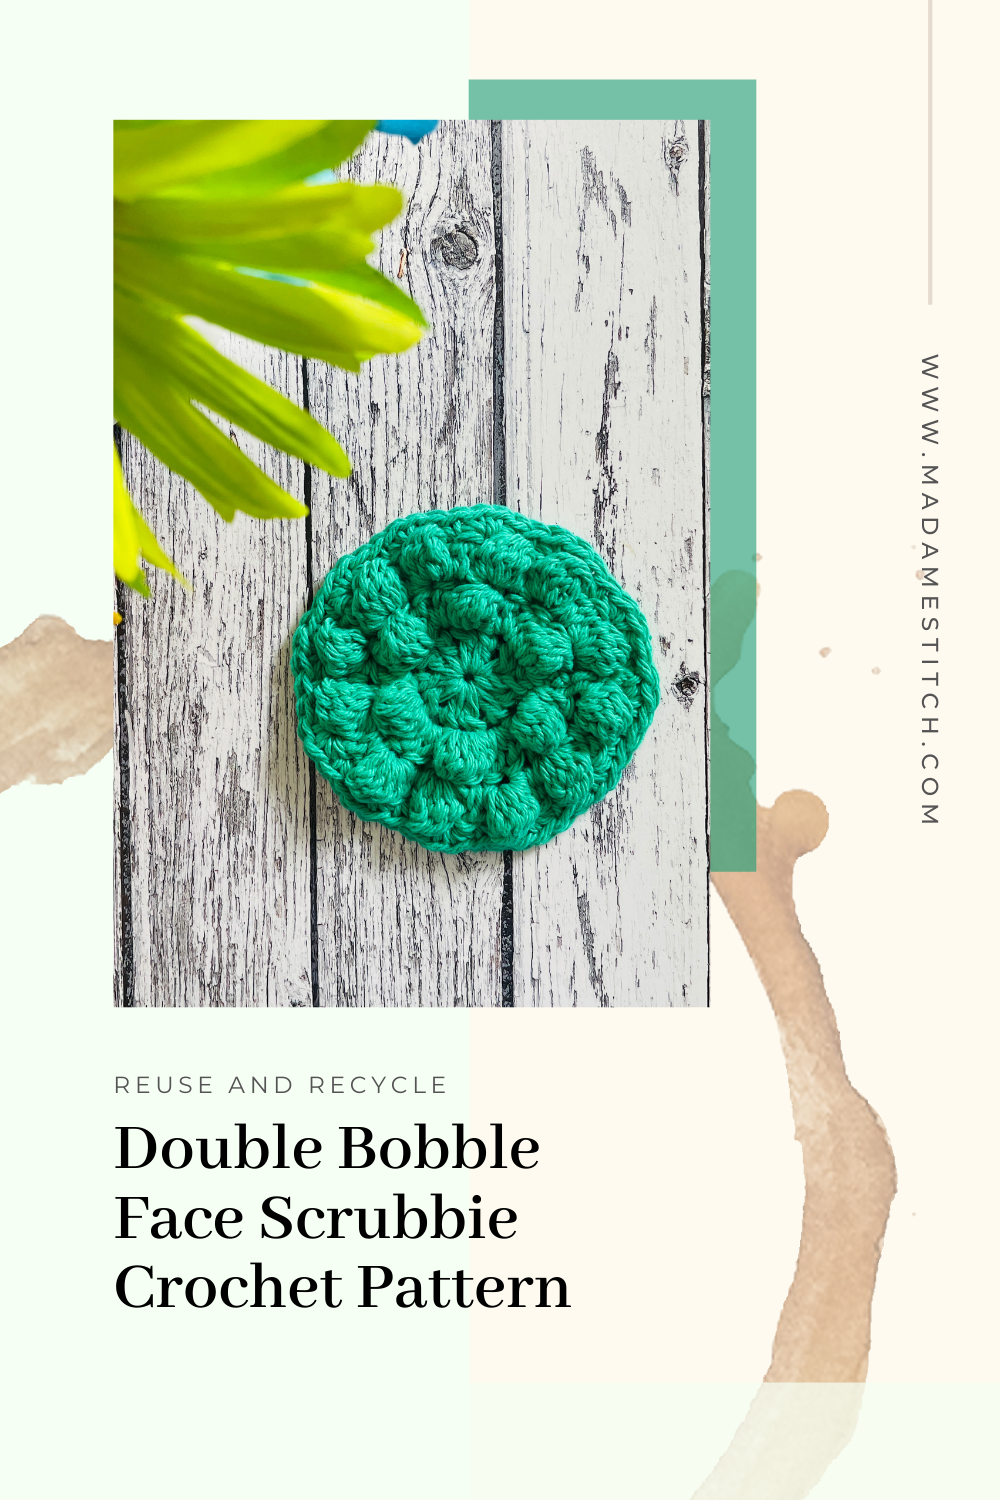 Double bobble face scrubbie crochet pattern by MadameStitch